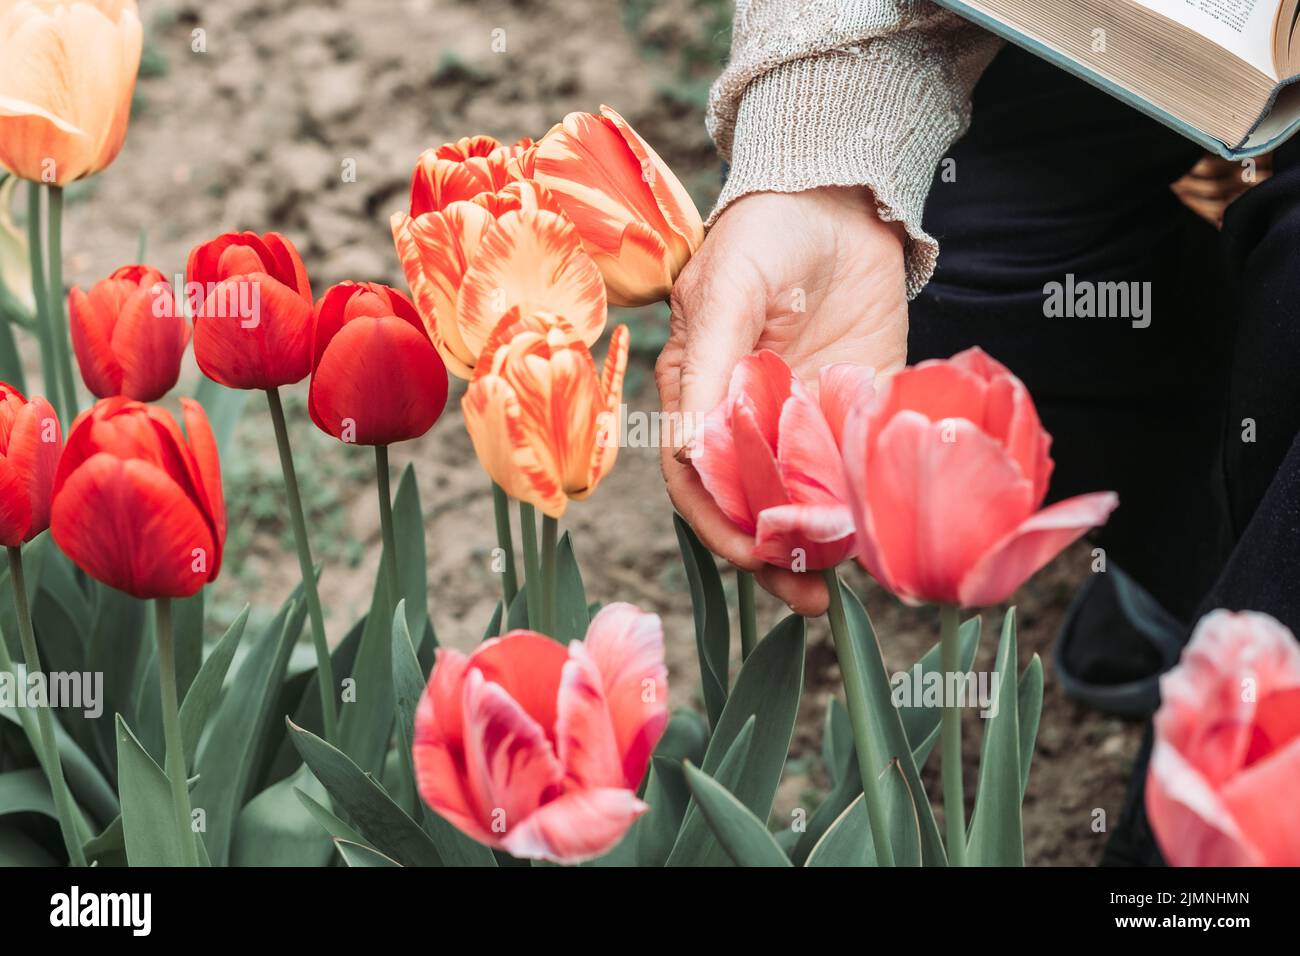 Elderly woman hand picking fresh tulips from the garden Stock Photo